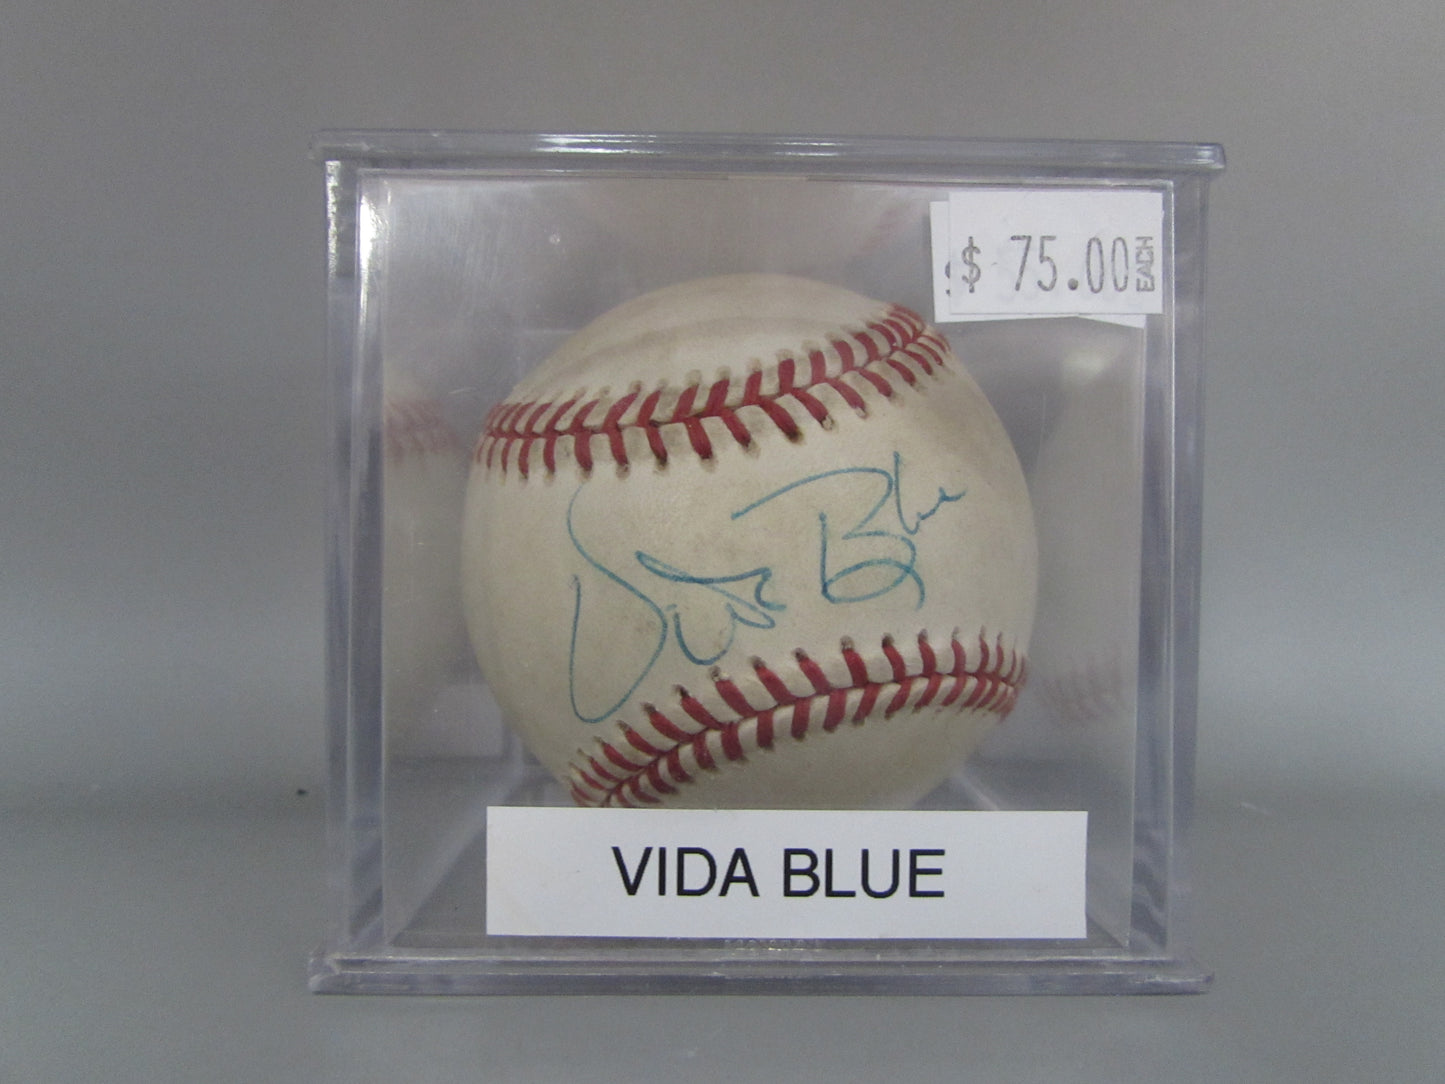 Vida Blue signed baseball